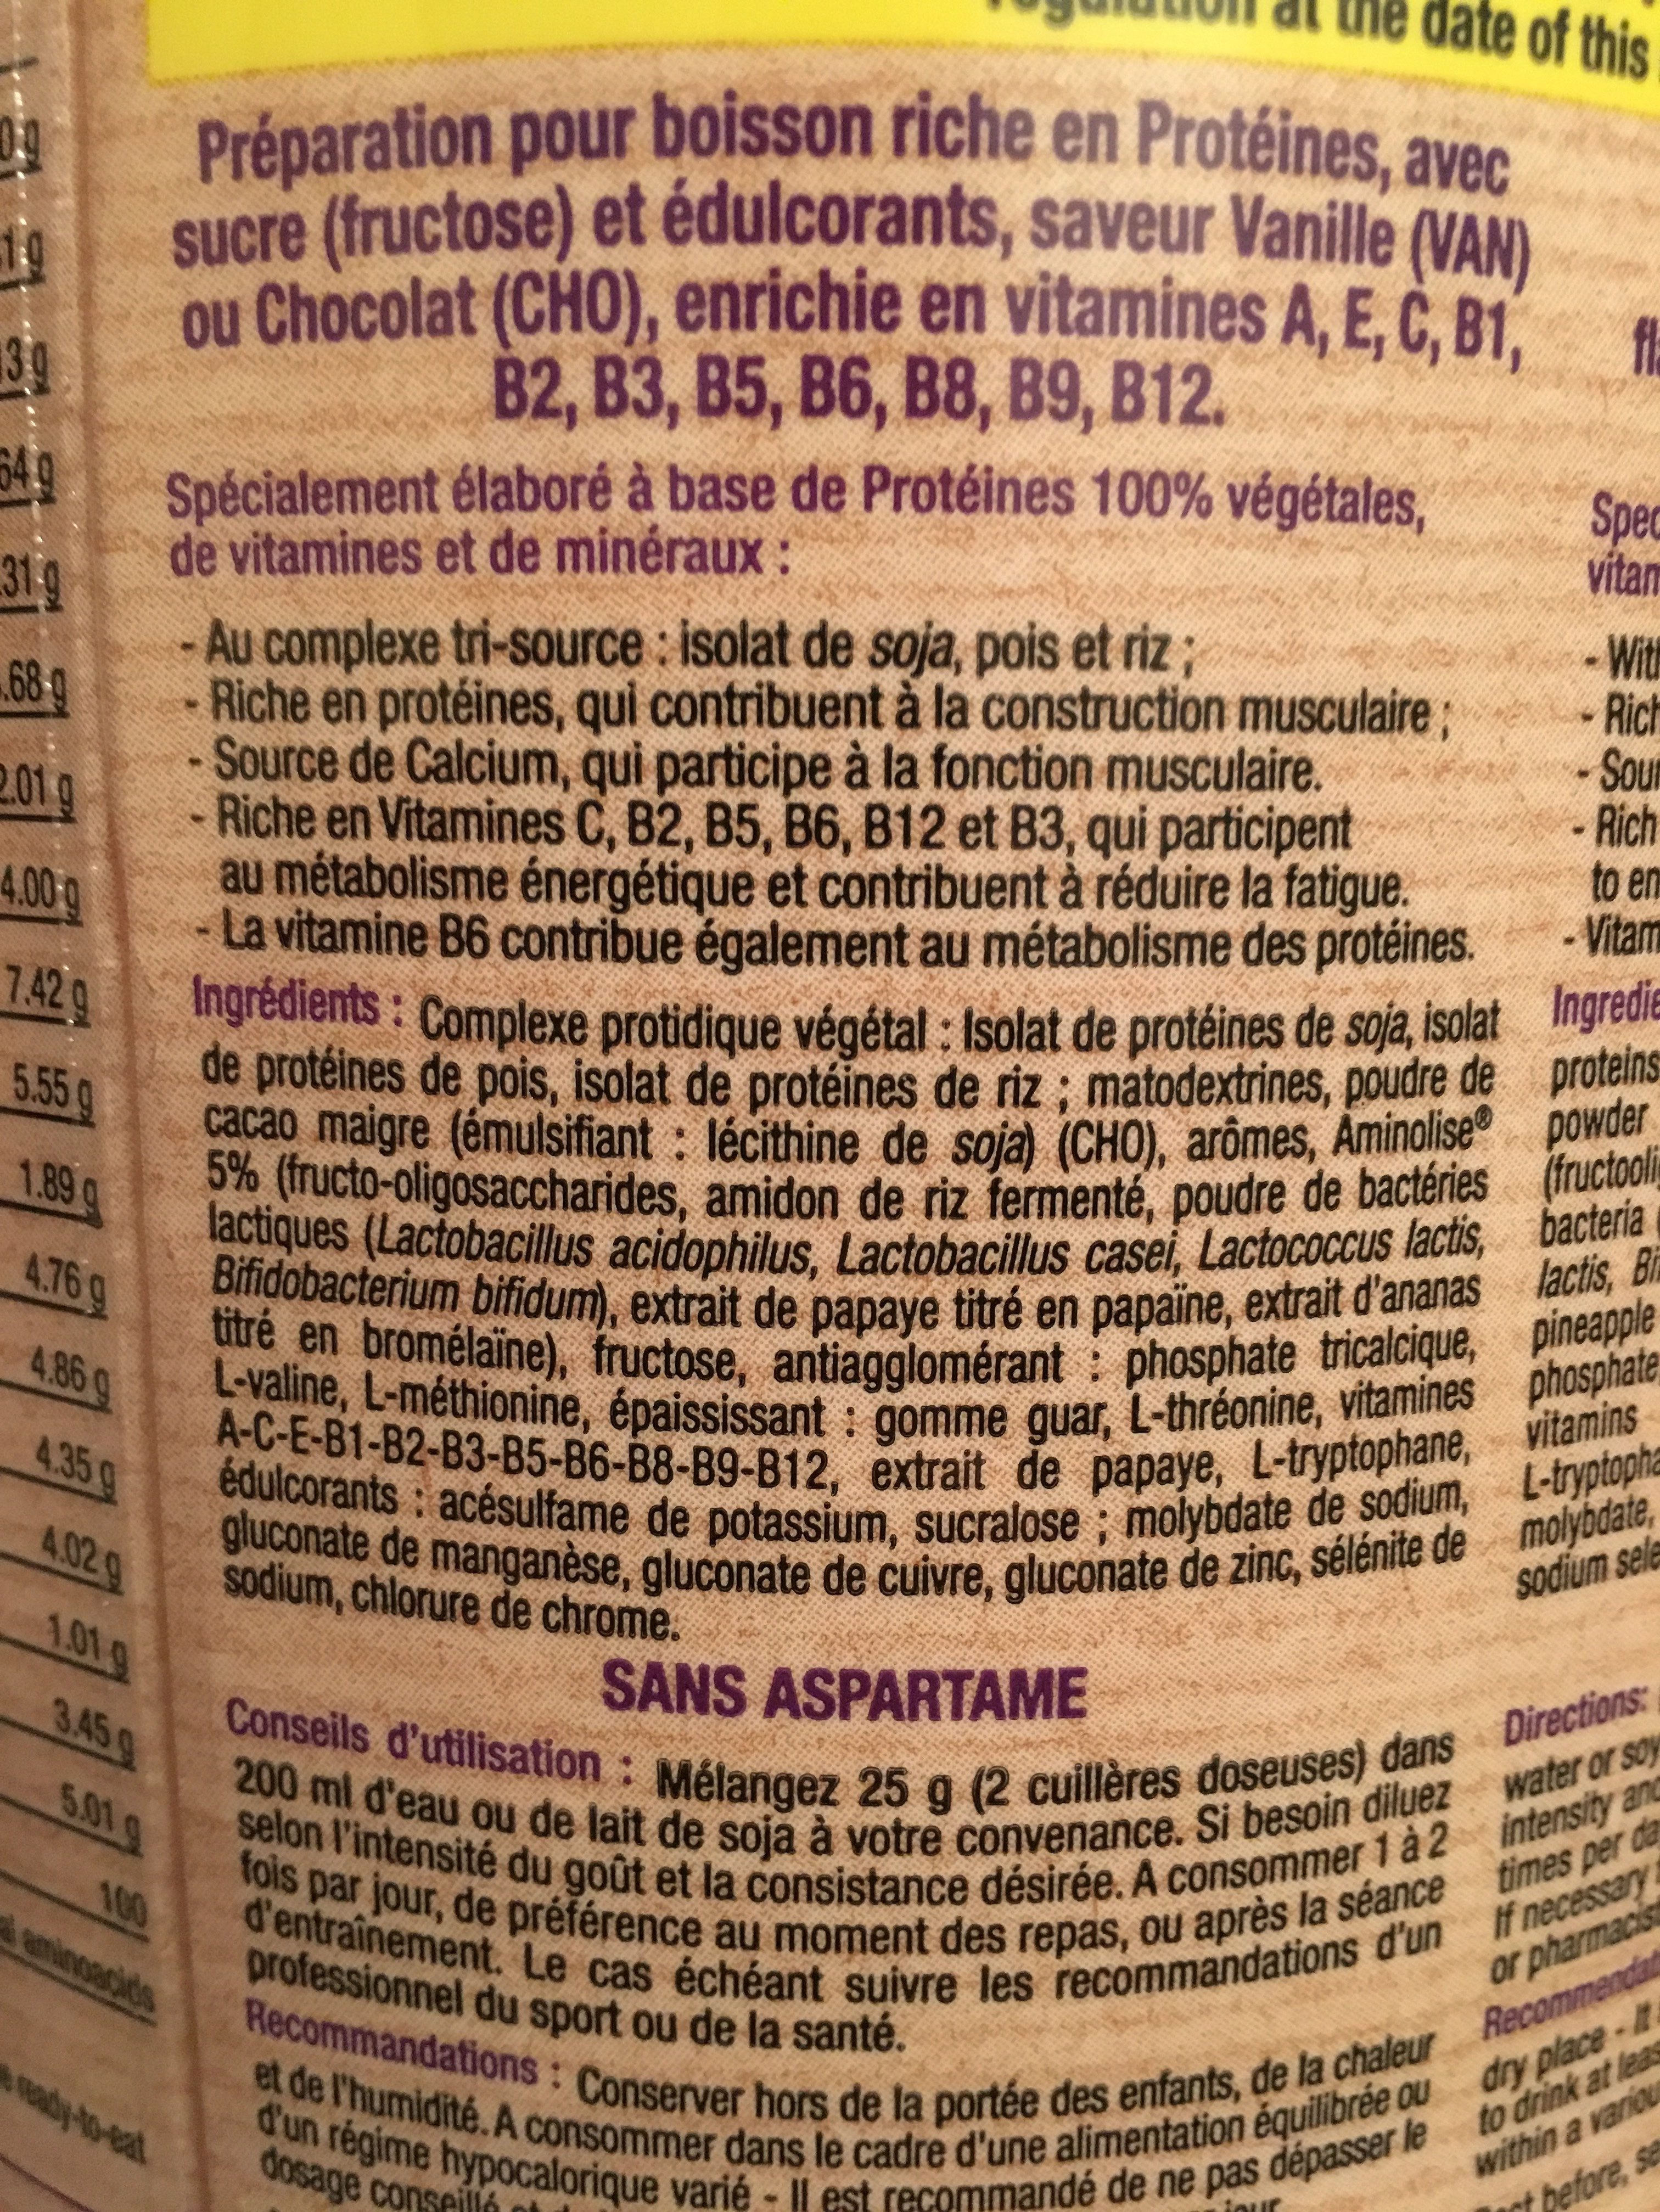 Vegetal Protein Chocolat - 750 G - STC Nutrition - Ingredients - fr